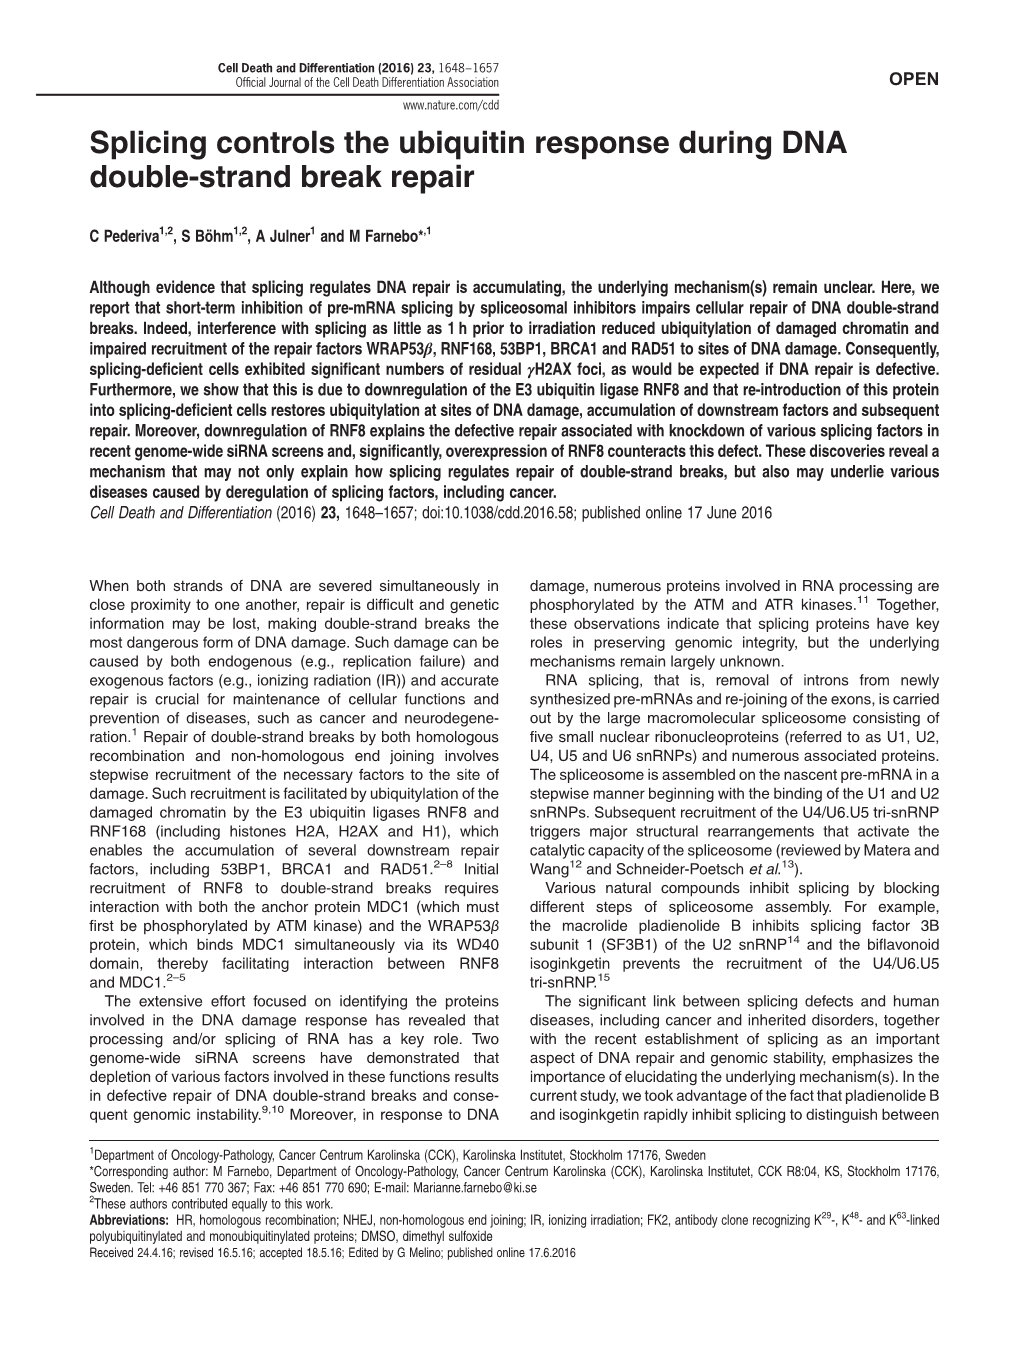 Splicing Controls the Ubiquitin Response During DNA Double-Strand Break Repair